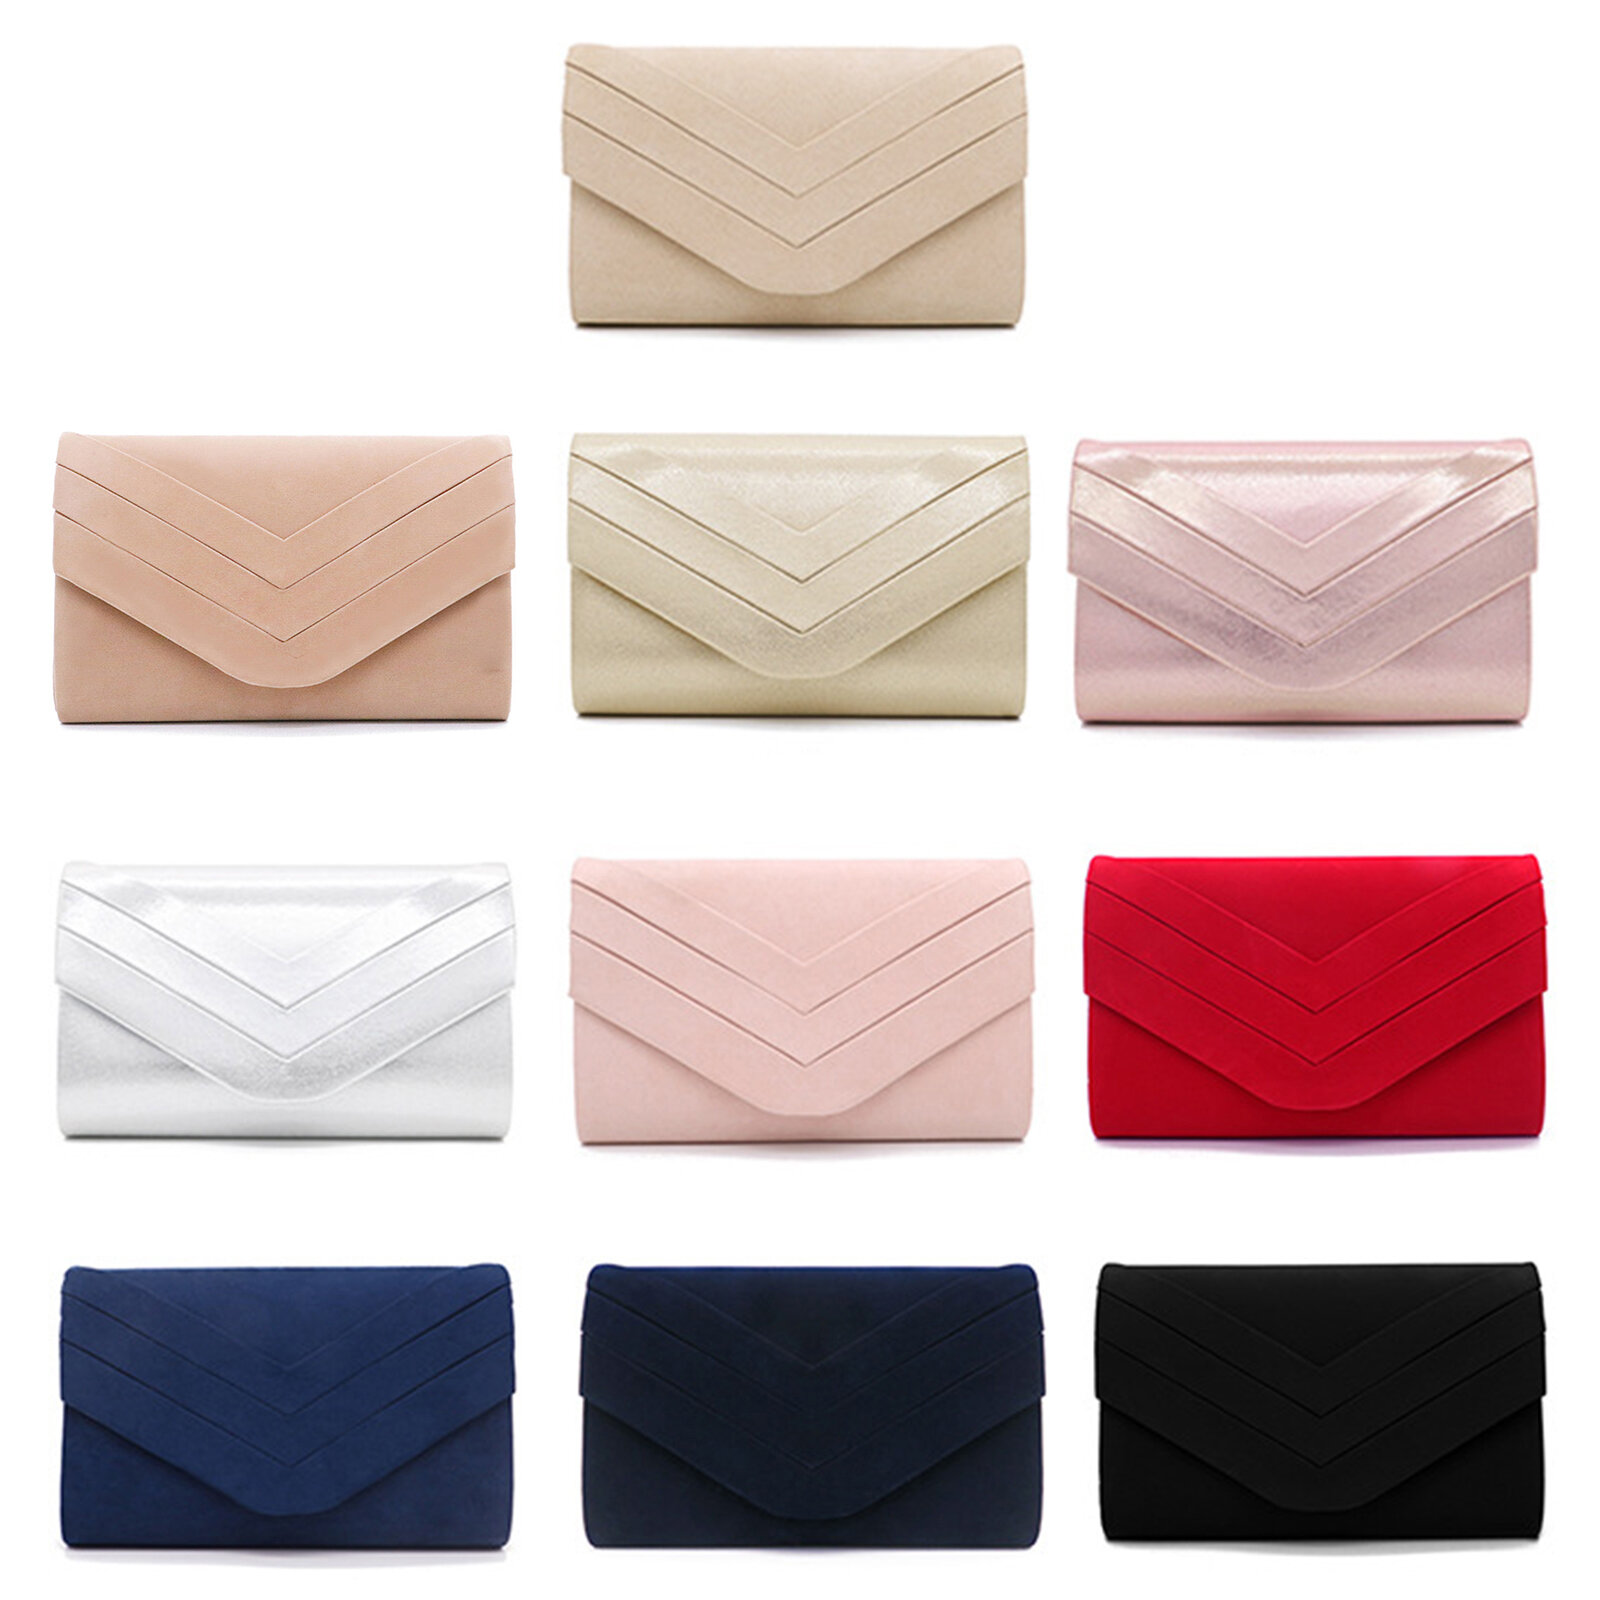 Women Dacron Fabric Elegant Fluffy Clutch Bag Magnetic Closure Casual Square Bag